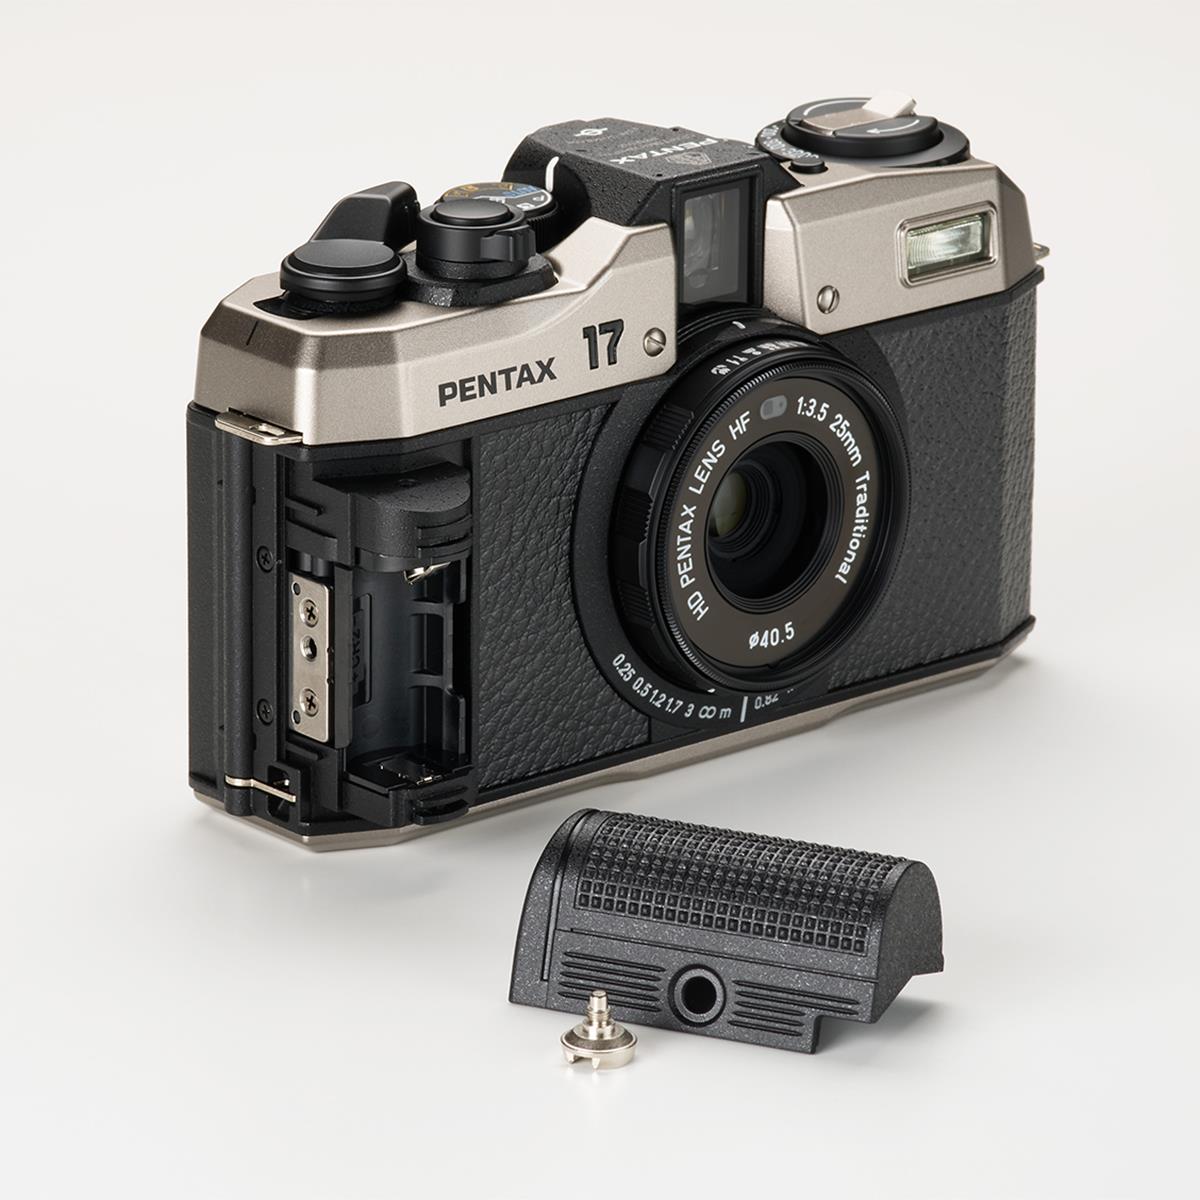 Pentax 17 Film Camera